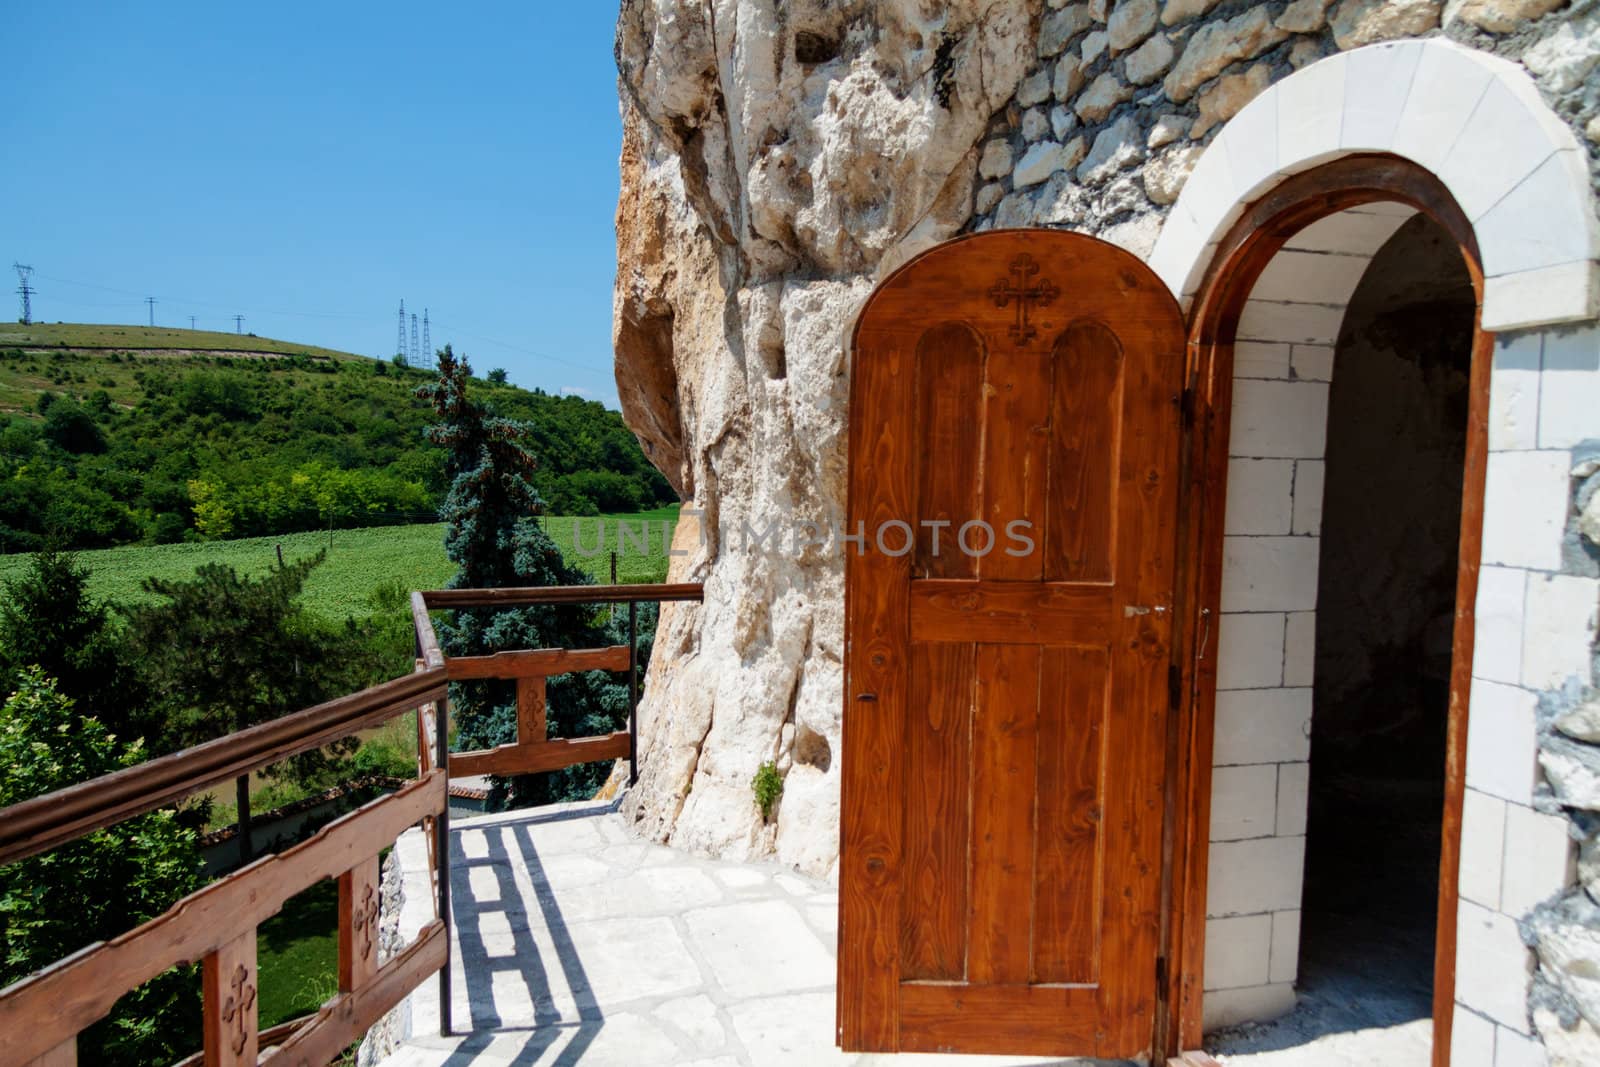 Orthodox monastery excavated in the rocks with open wooden door by Lamarinx